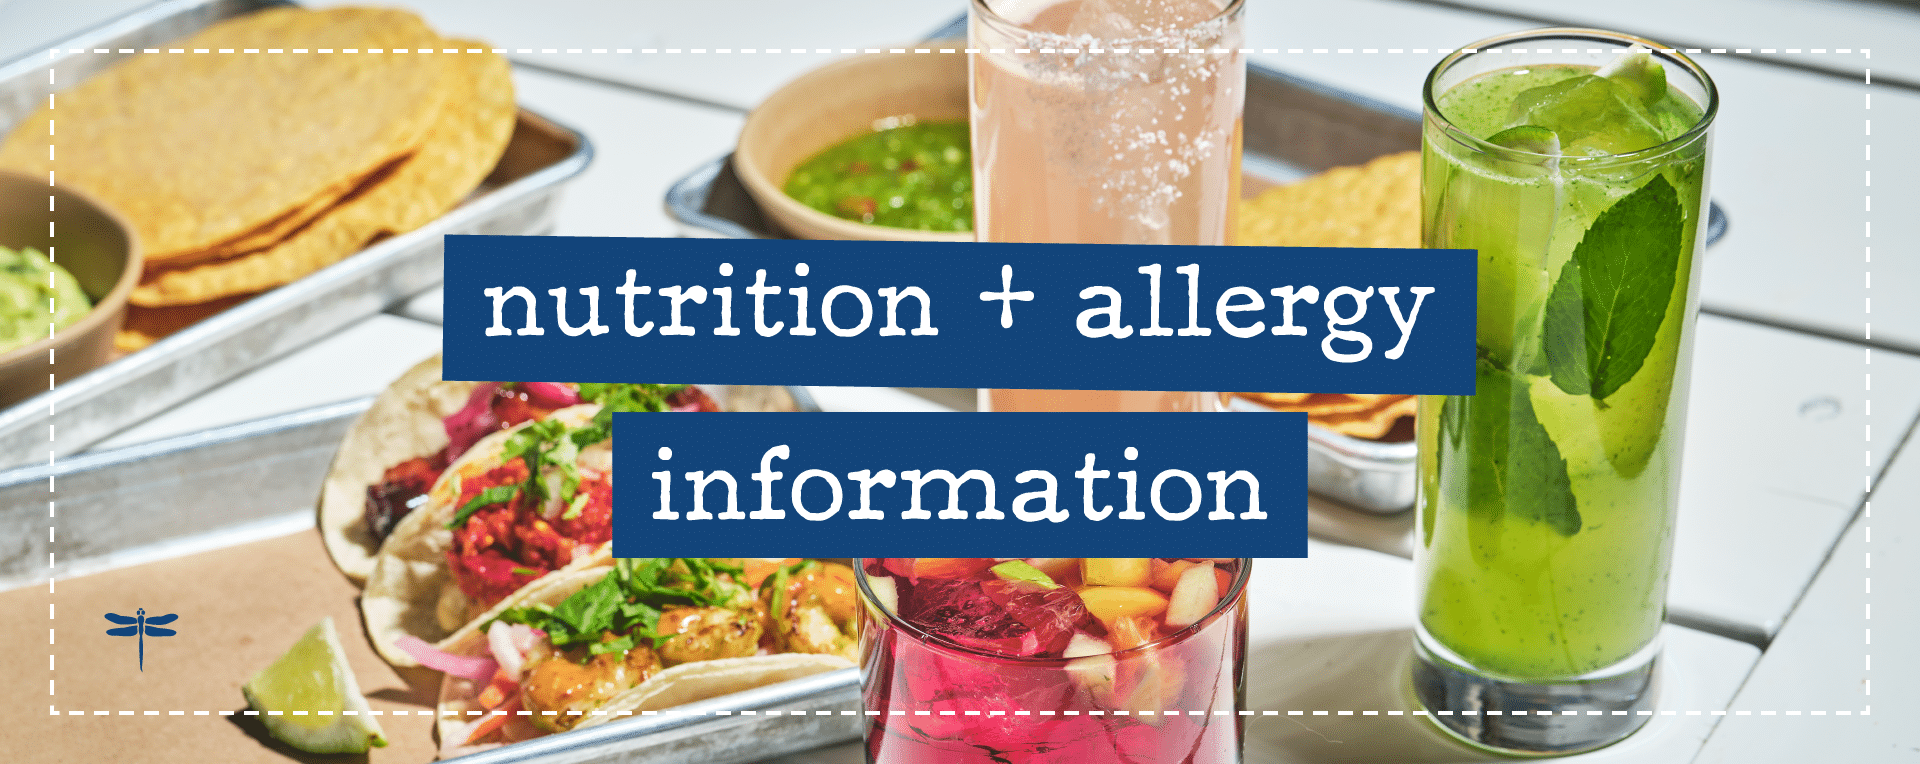 Nutrition + Allergy Information 1